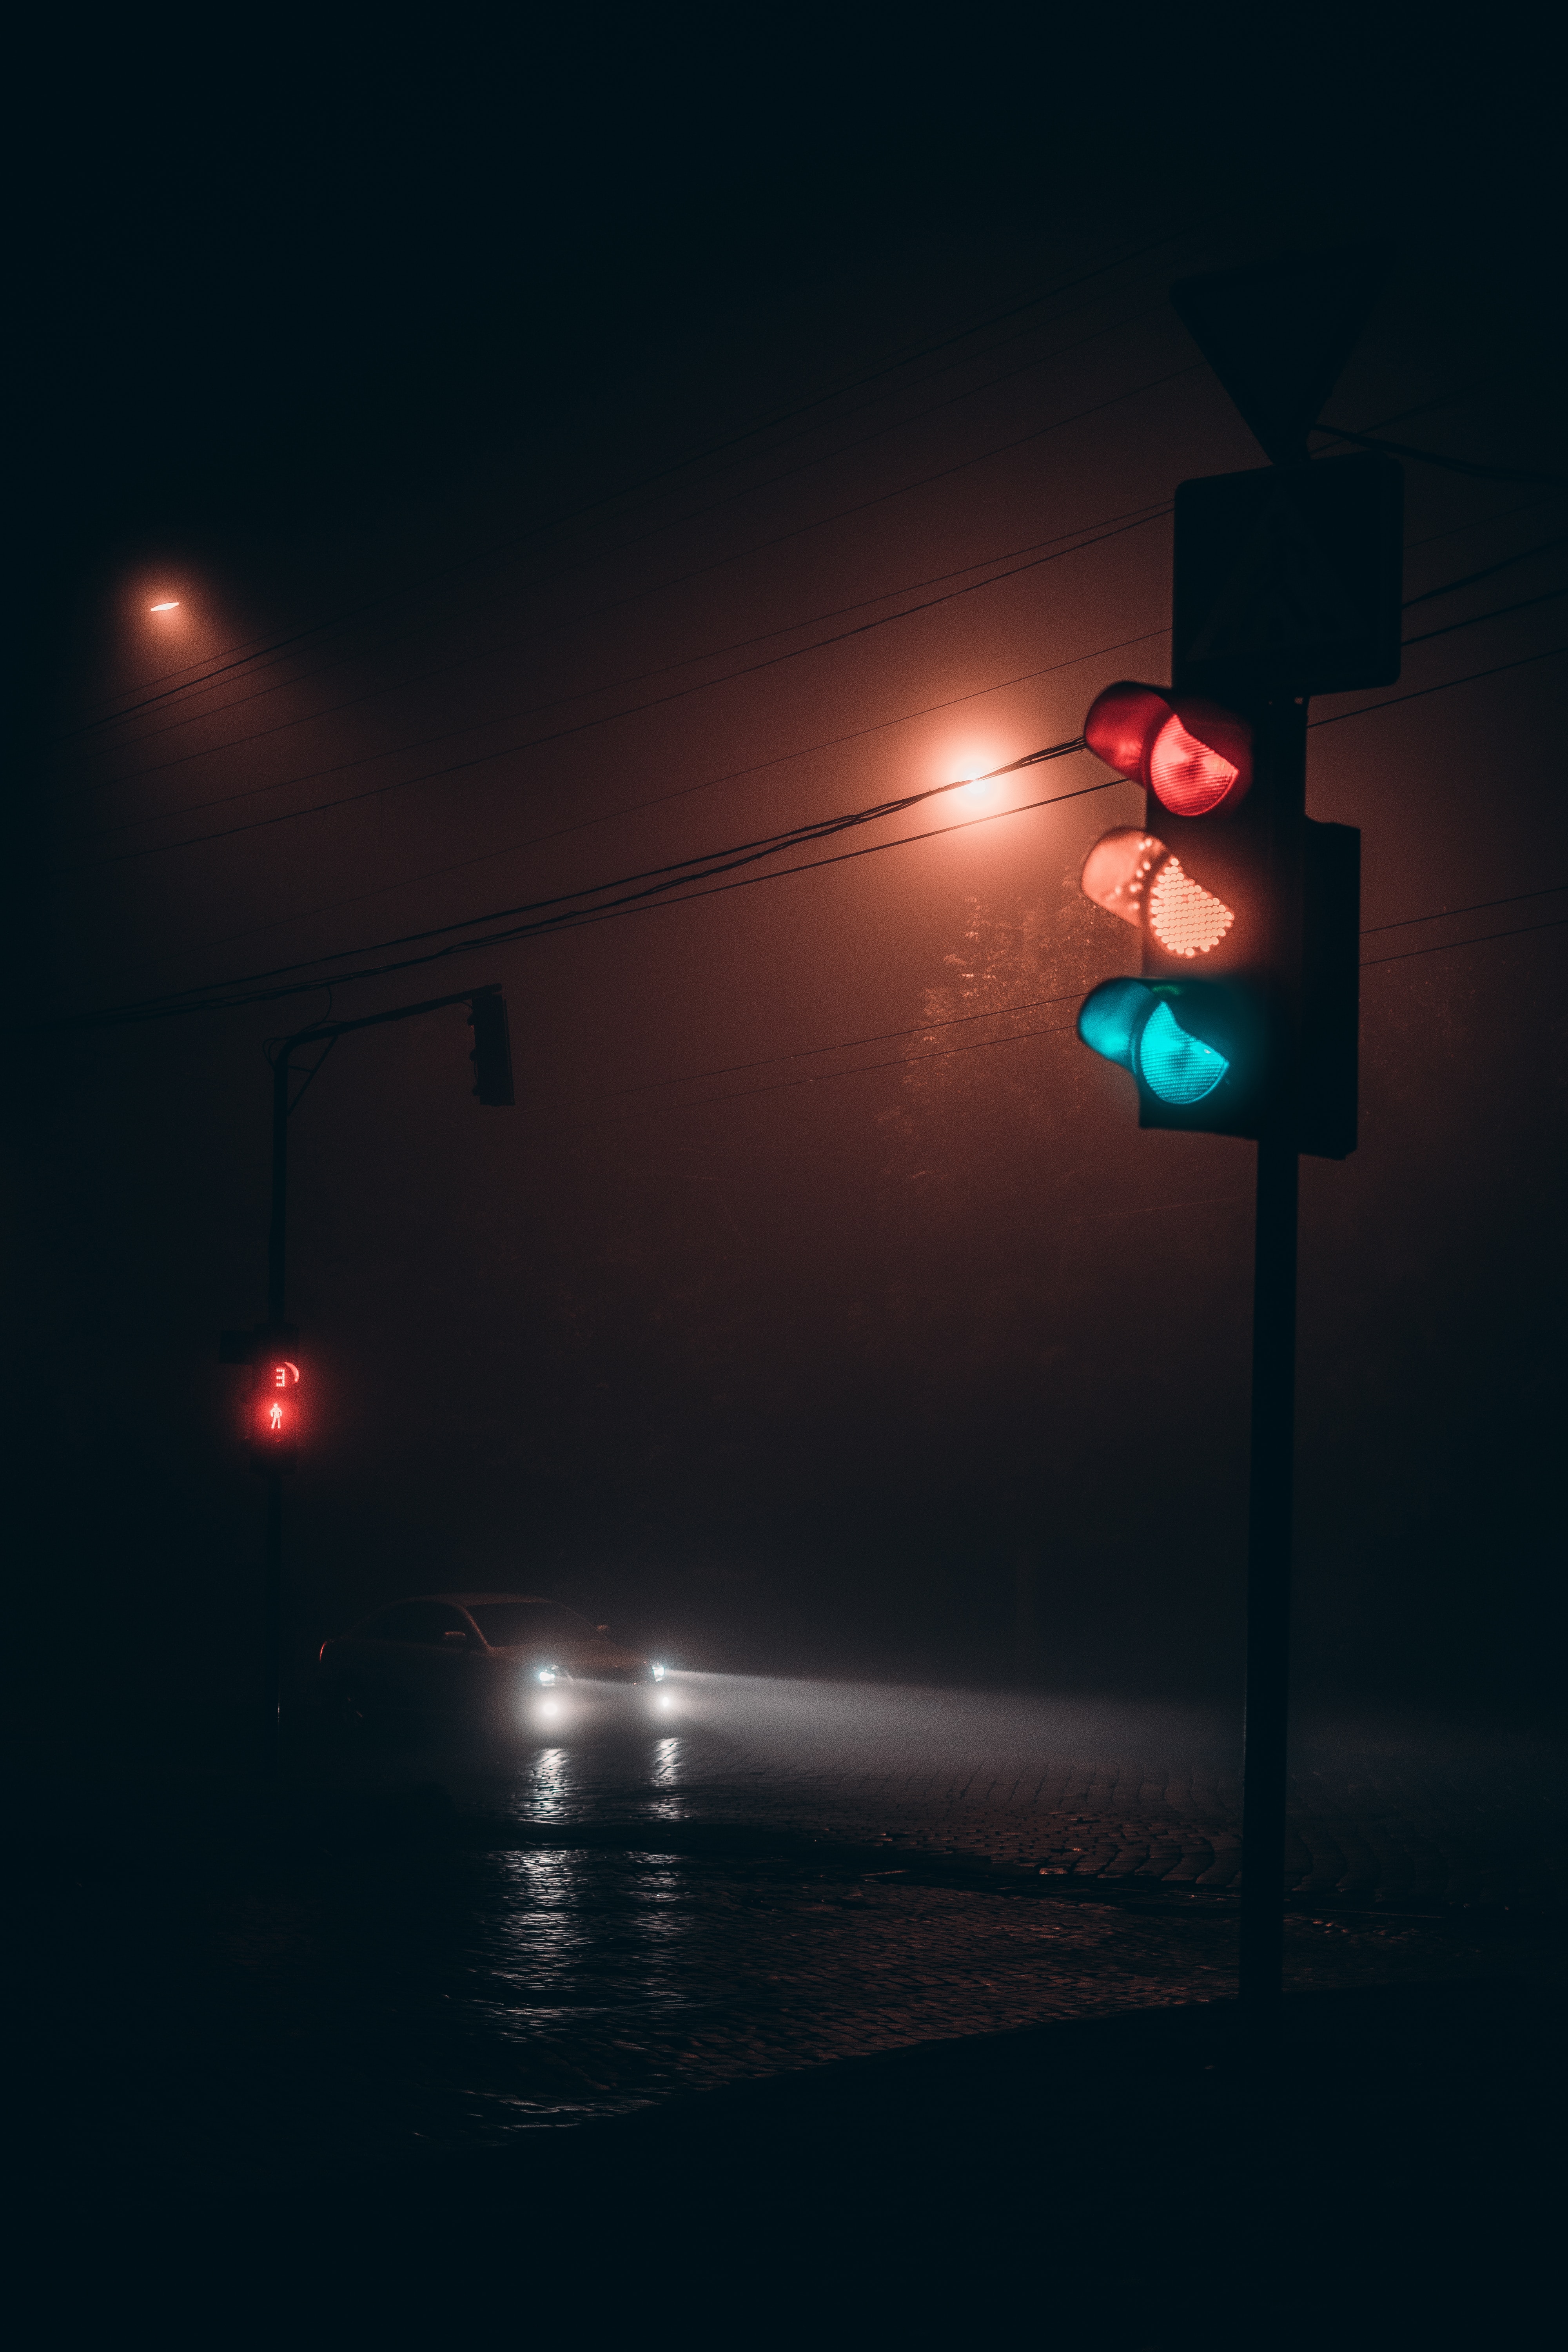 Free HD cities, fog, night, dark, road, car, machine, traffic light